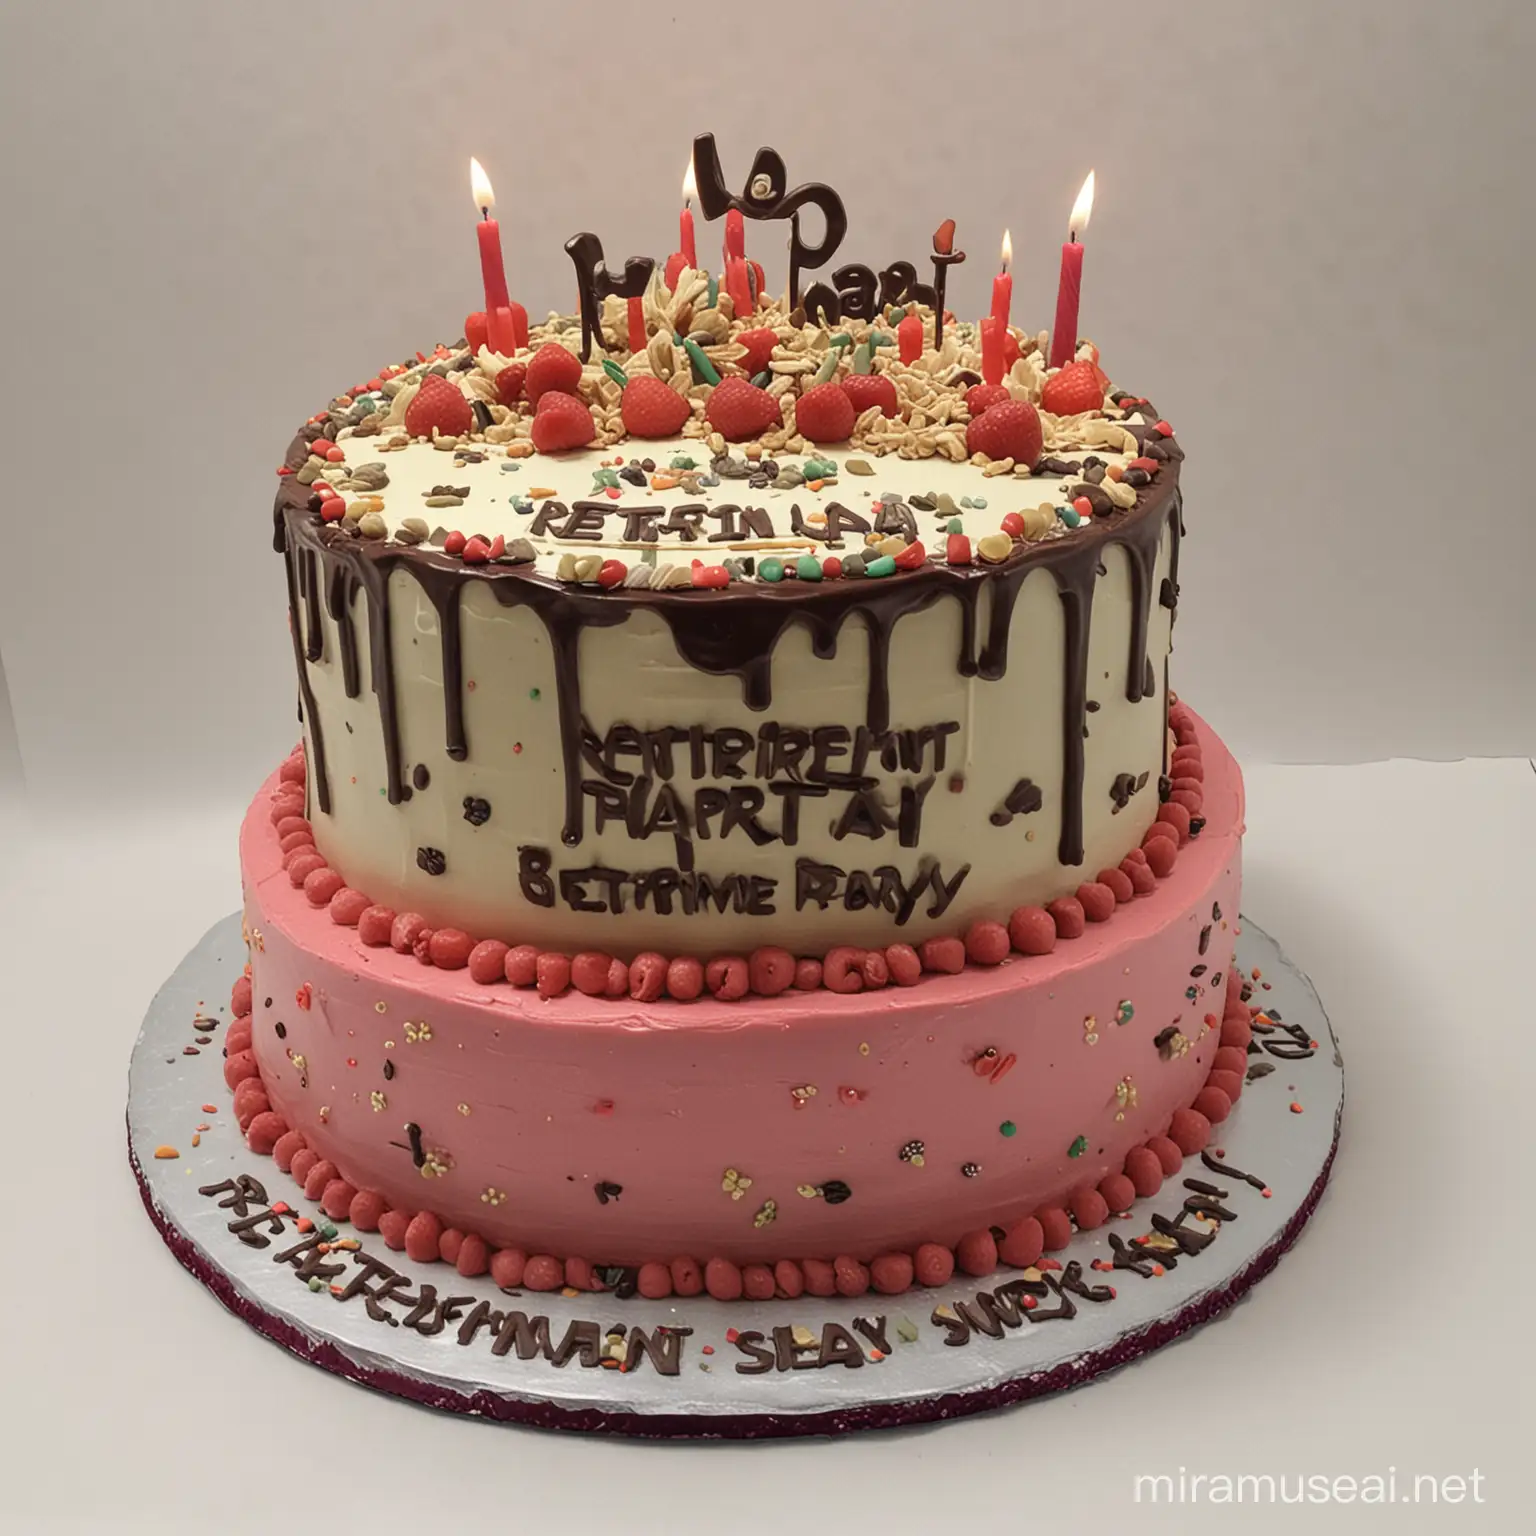 Retirement Celebration with Customizable Cakes